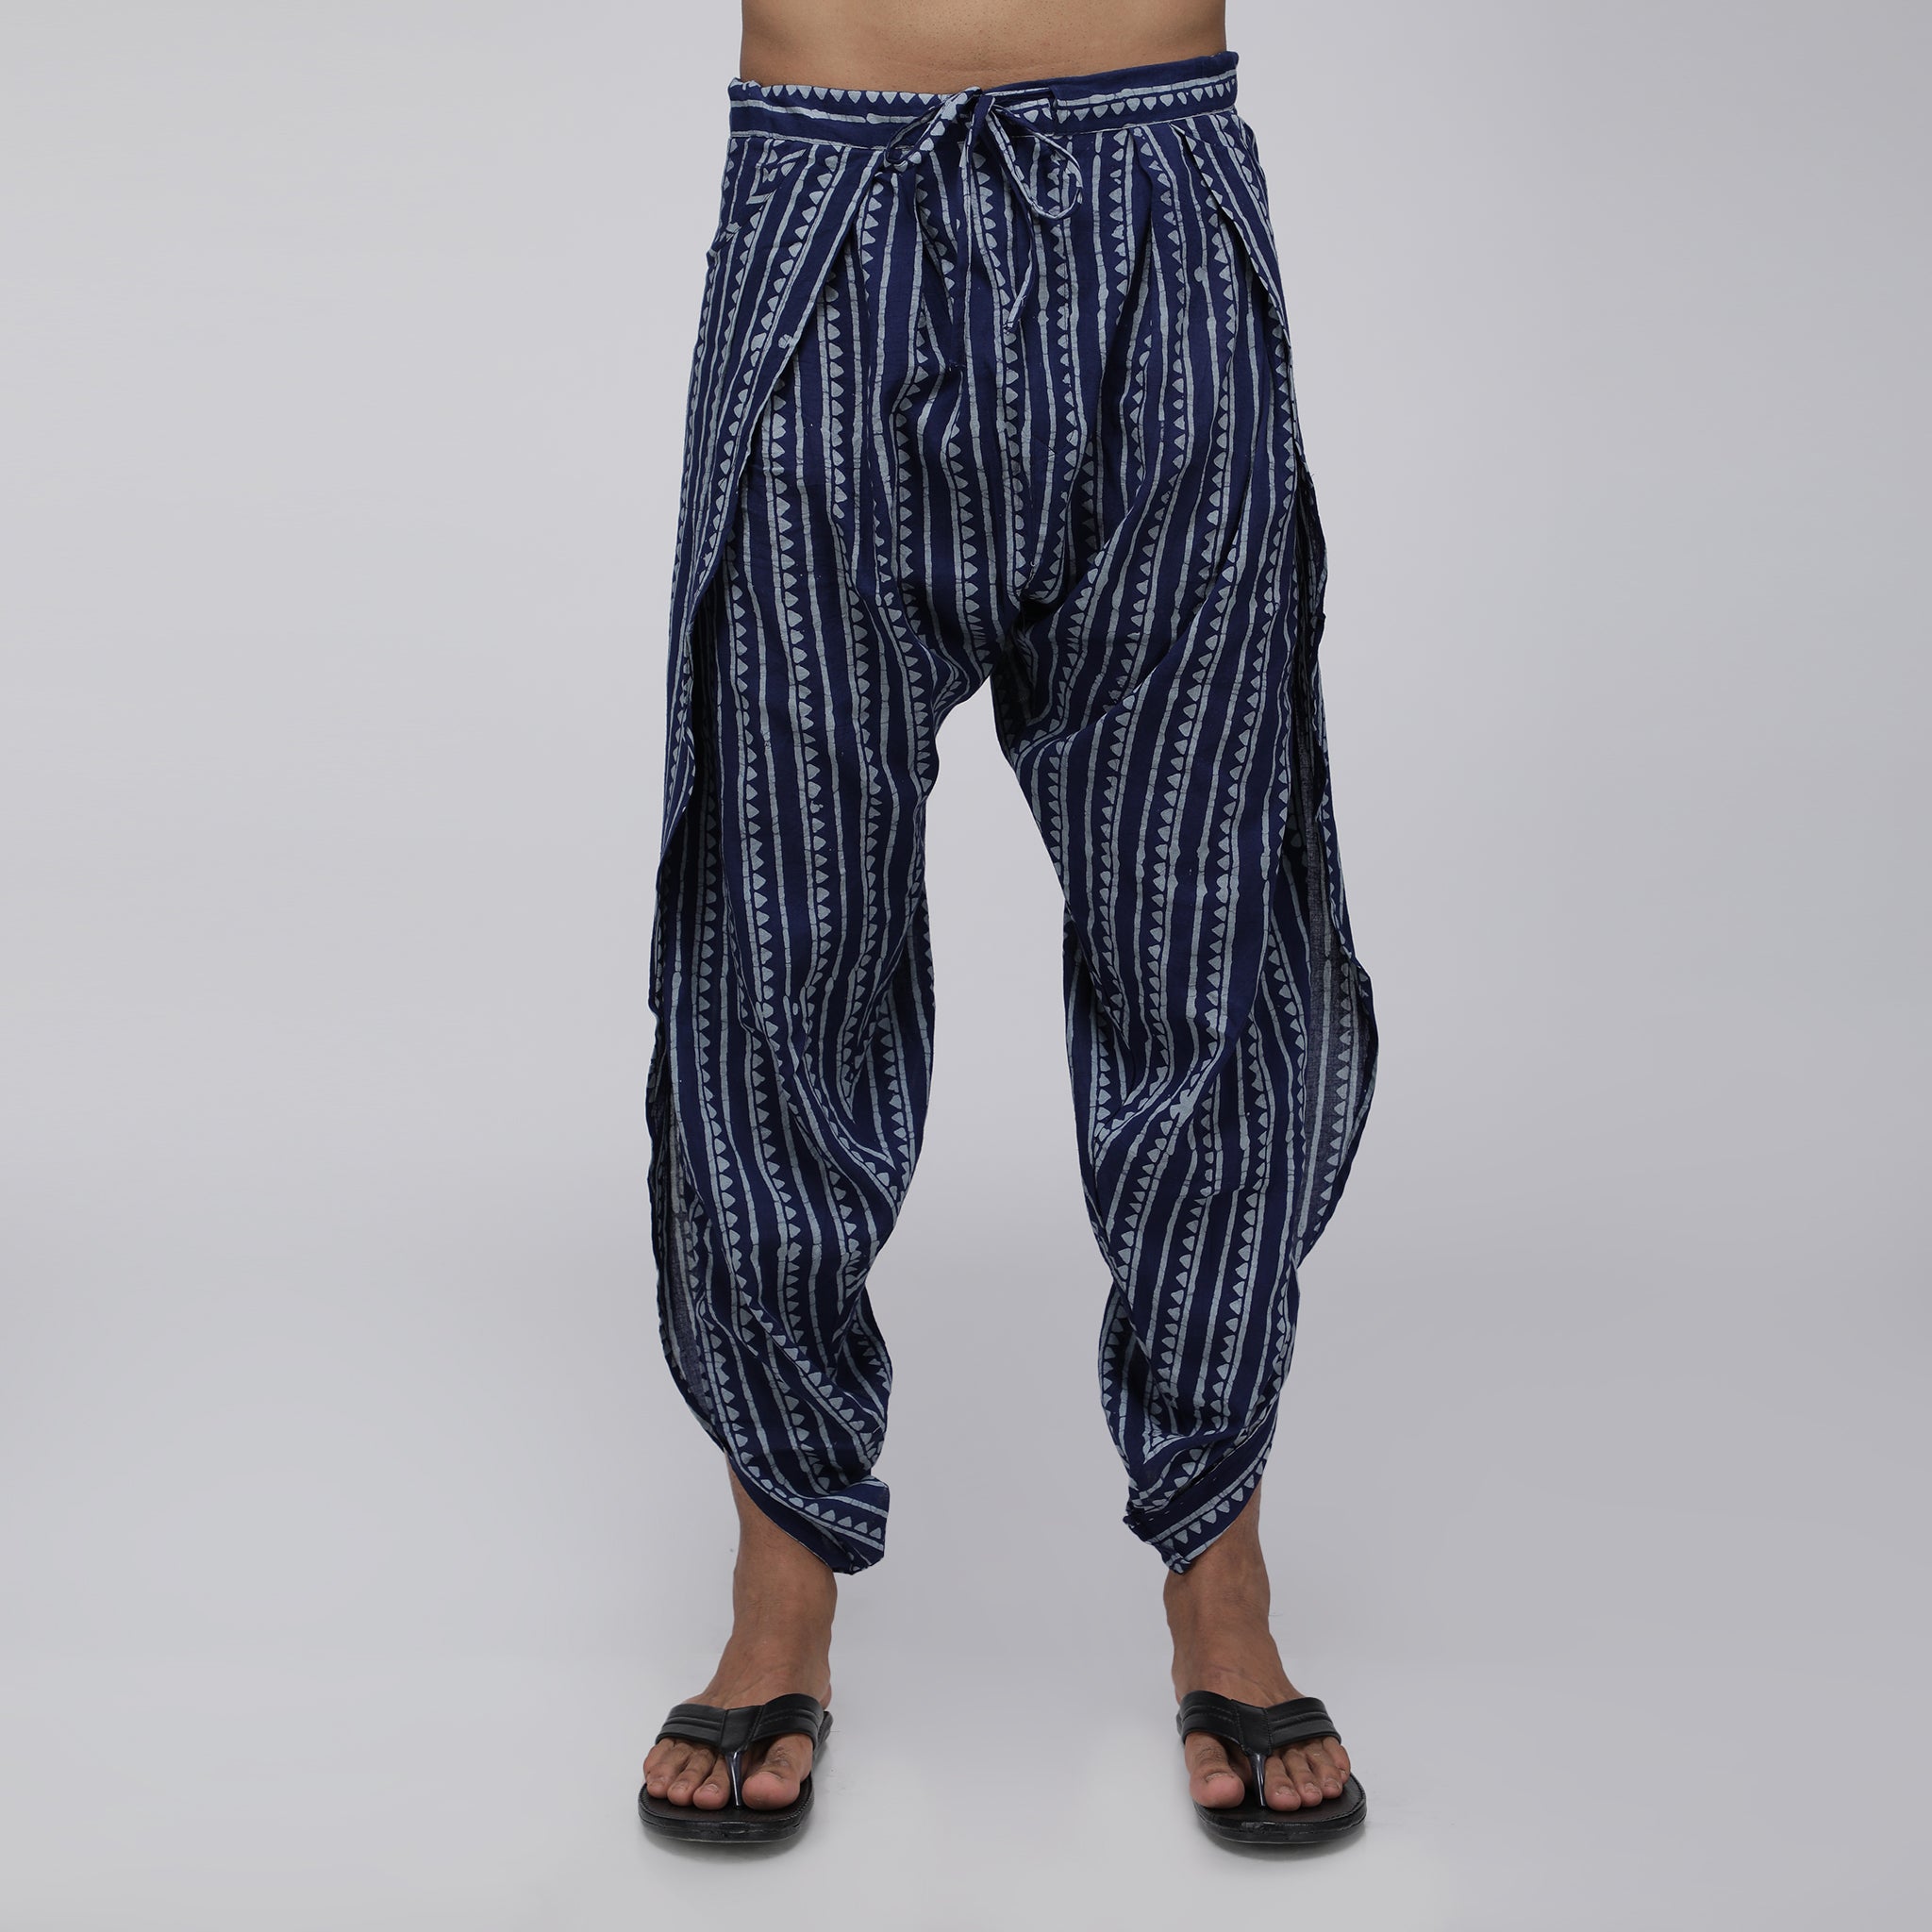 Dhoti Pants for Men | Designer Menswear Bottoms Online